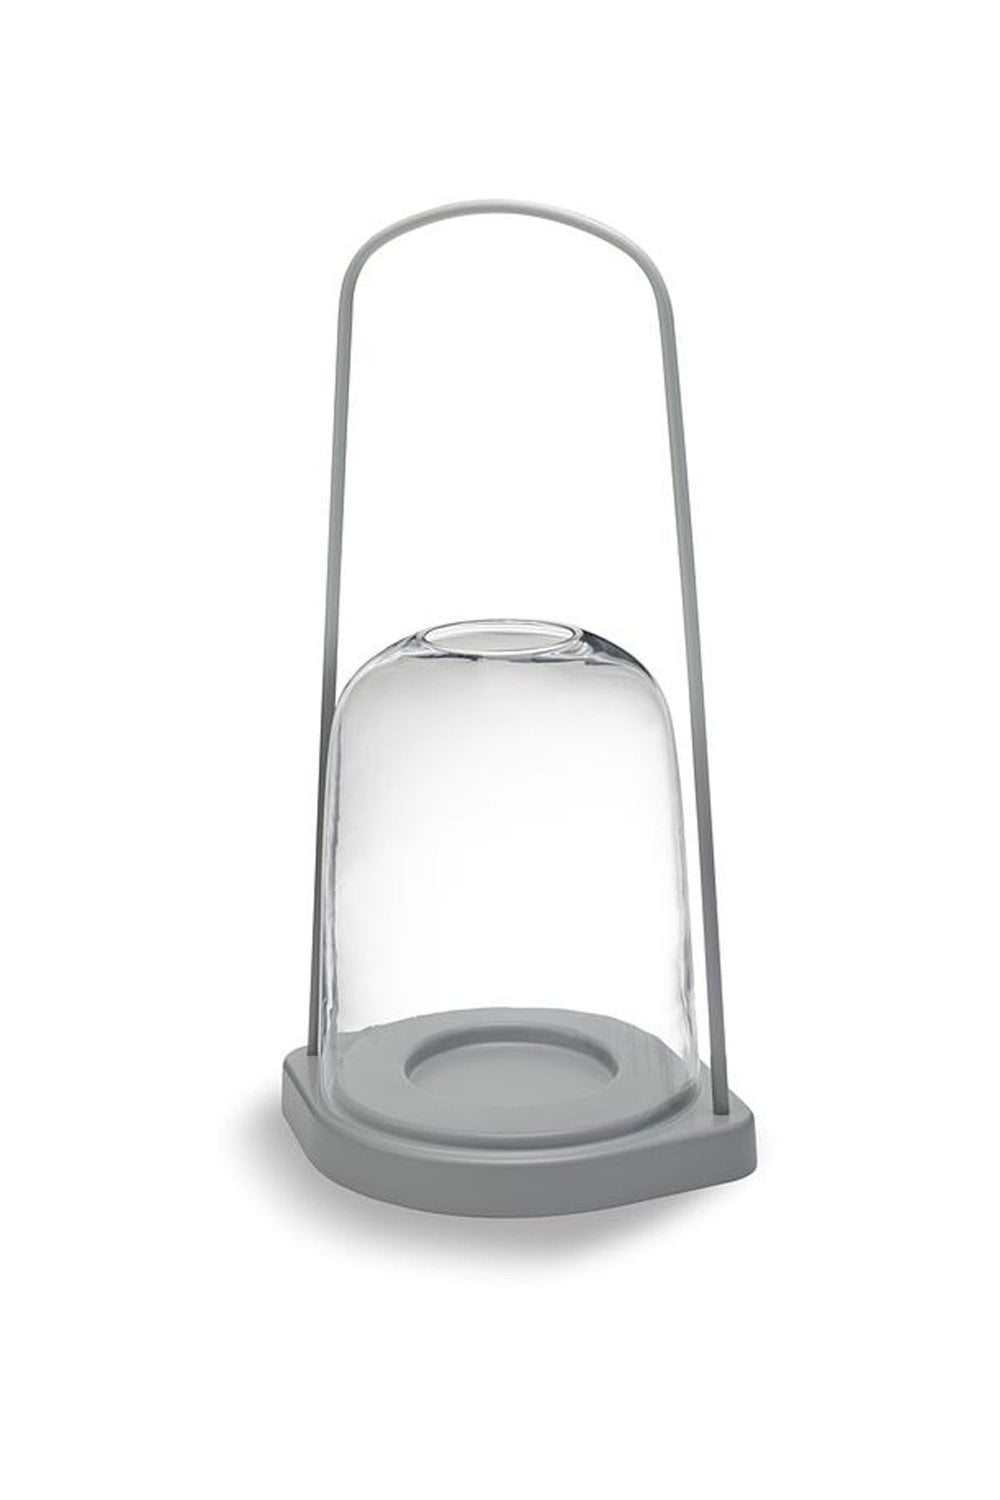 Bell Lantern Large In Light Grey